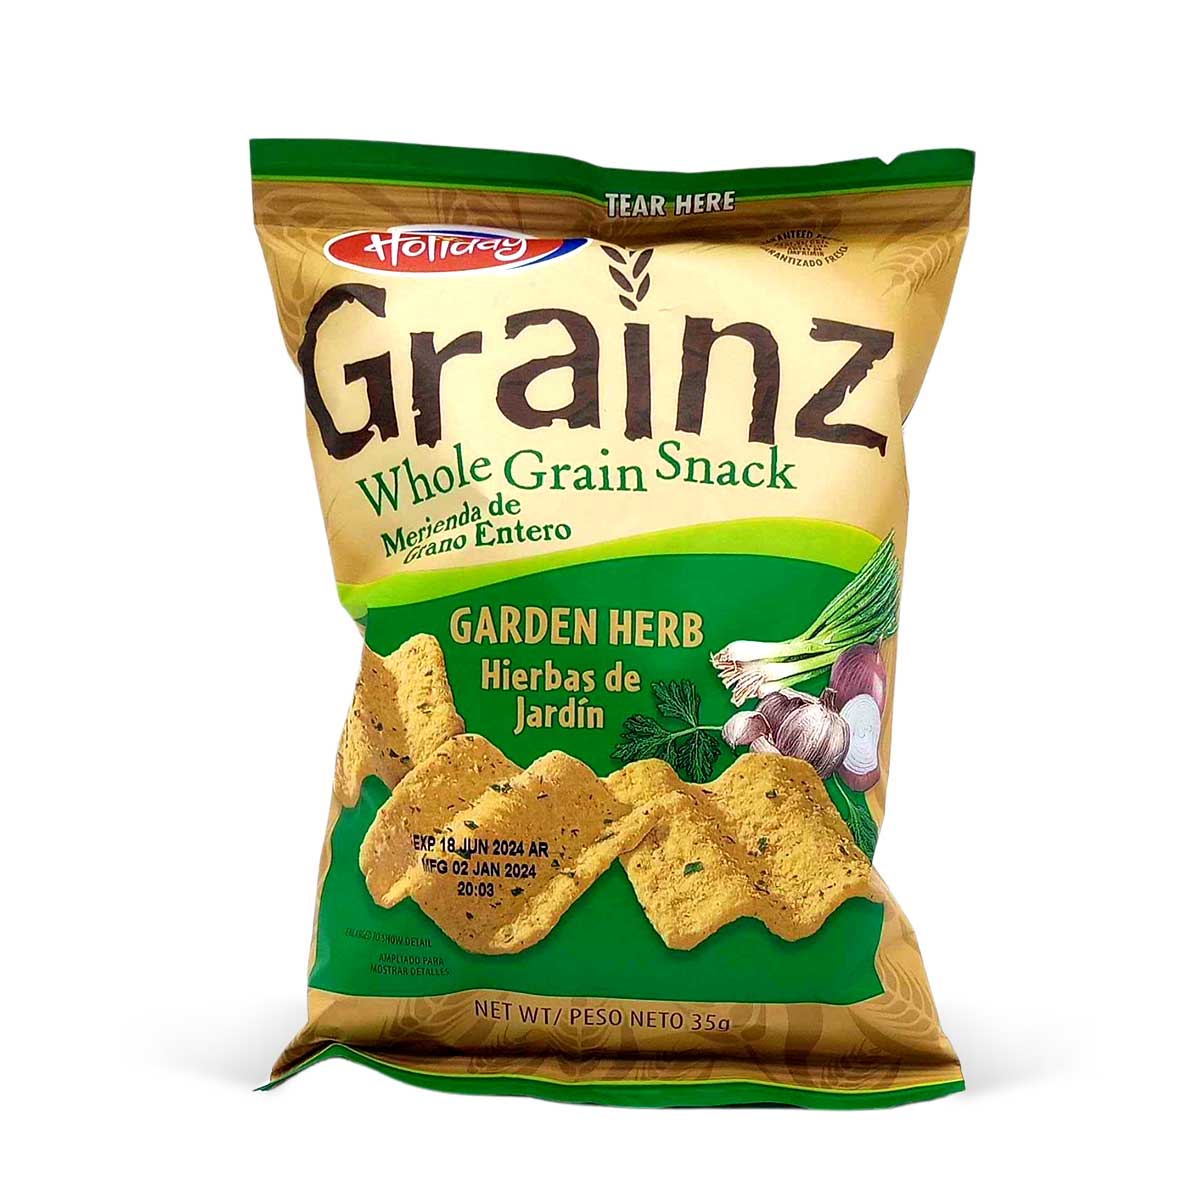 Holiday Grainz Whole Grain Snack Garden Herb, 35g (3 Pack)